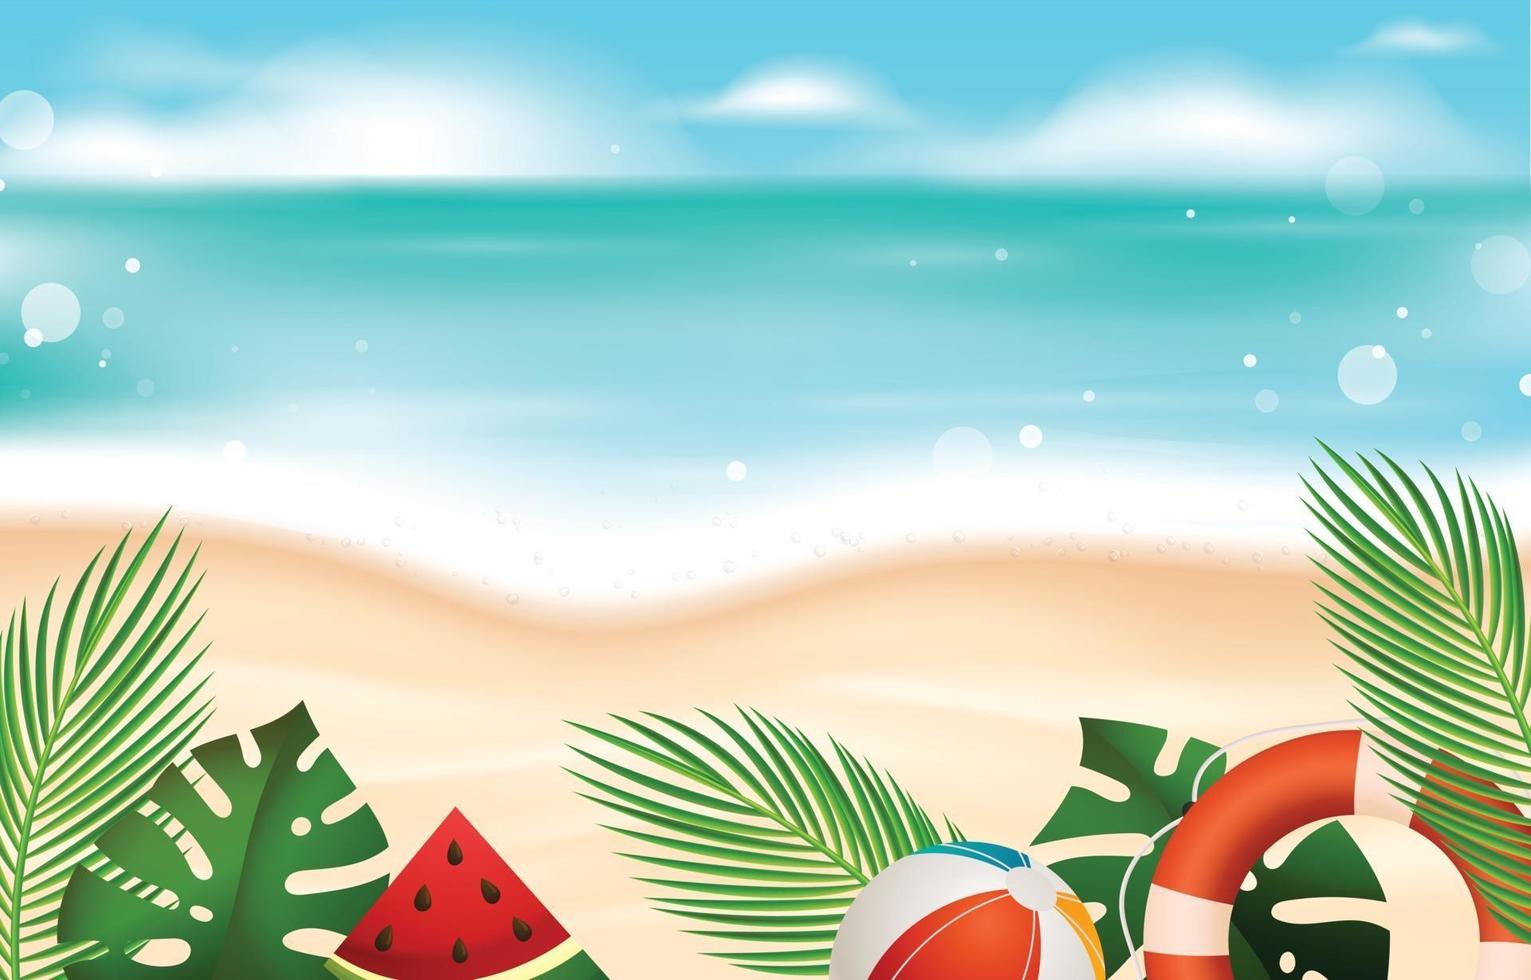 Realistic Summer Beach Background vector